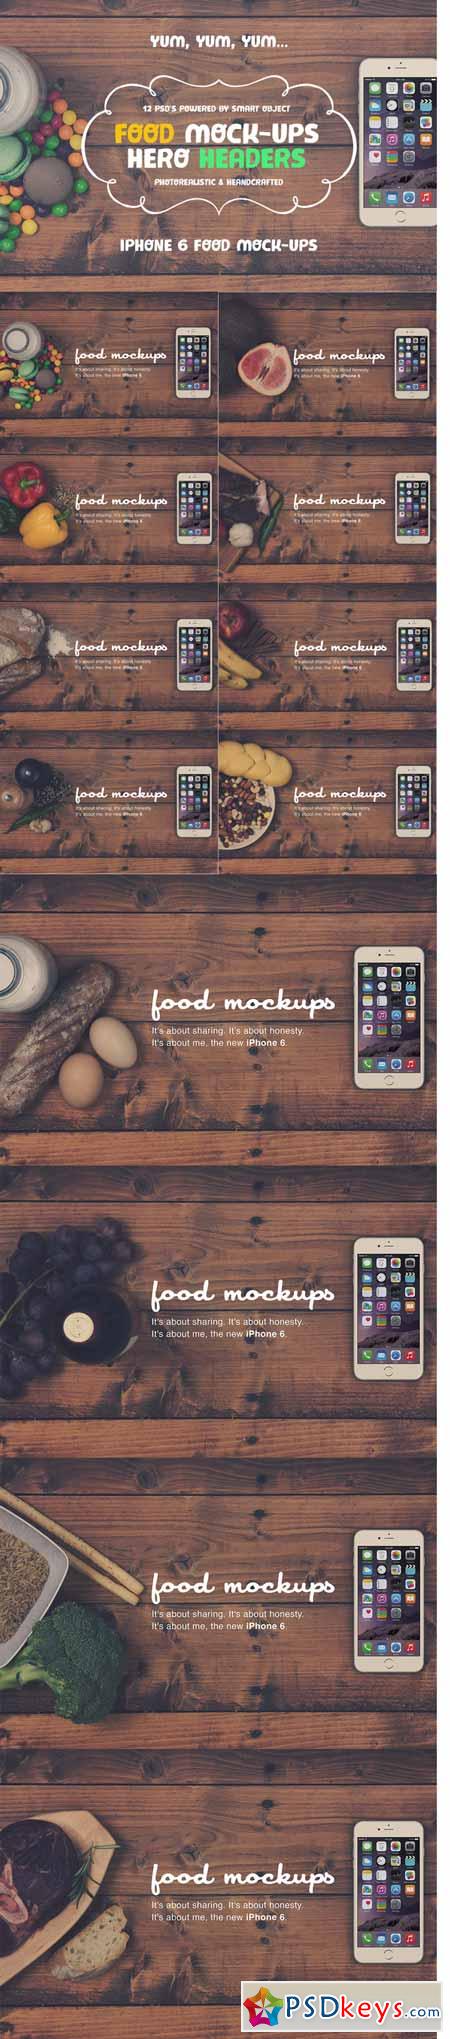 Food Hero Headers iPhone 6 Mock-ups 84552